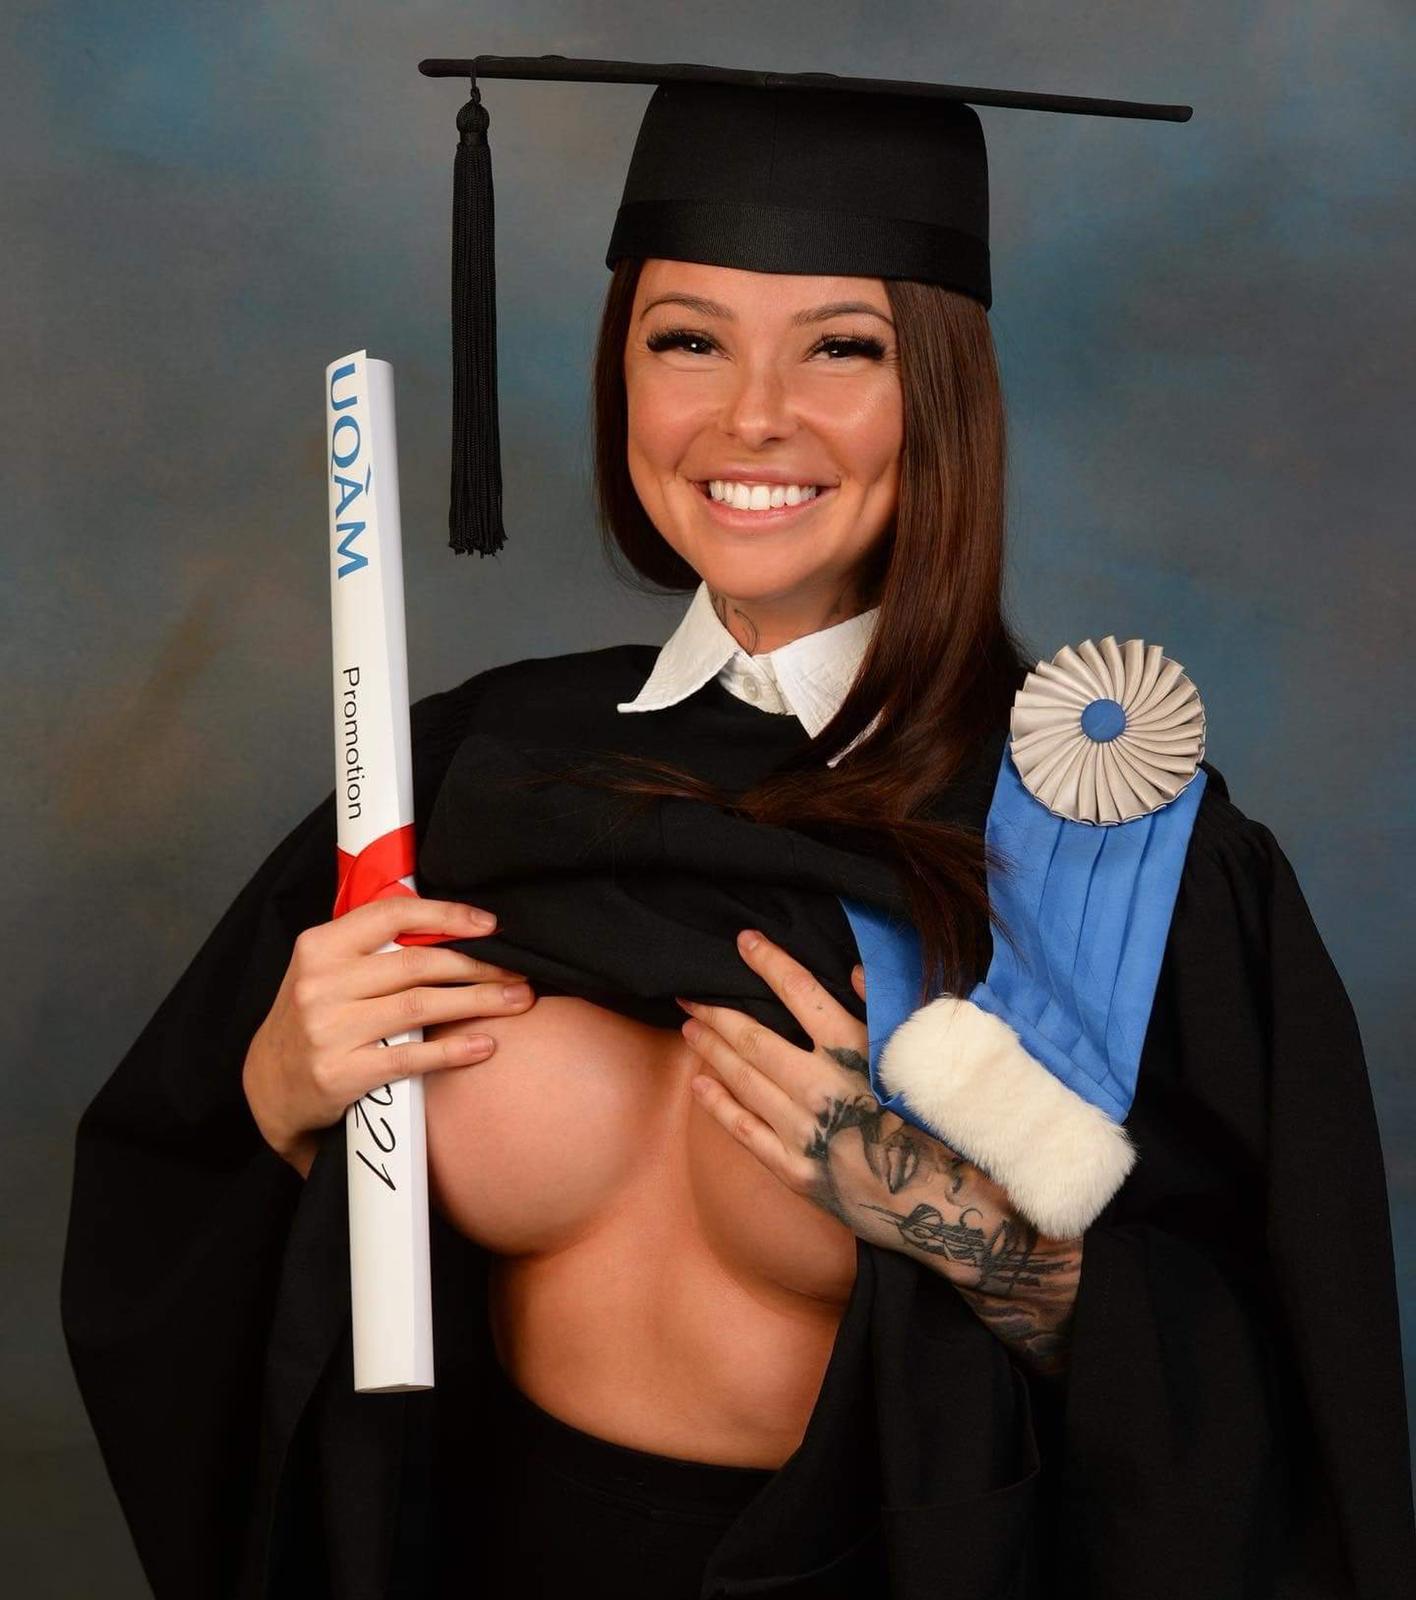 Nude Female Grads